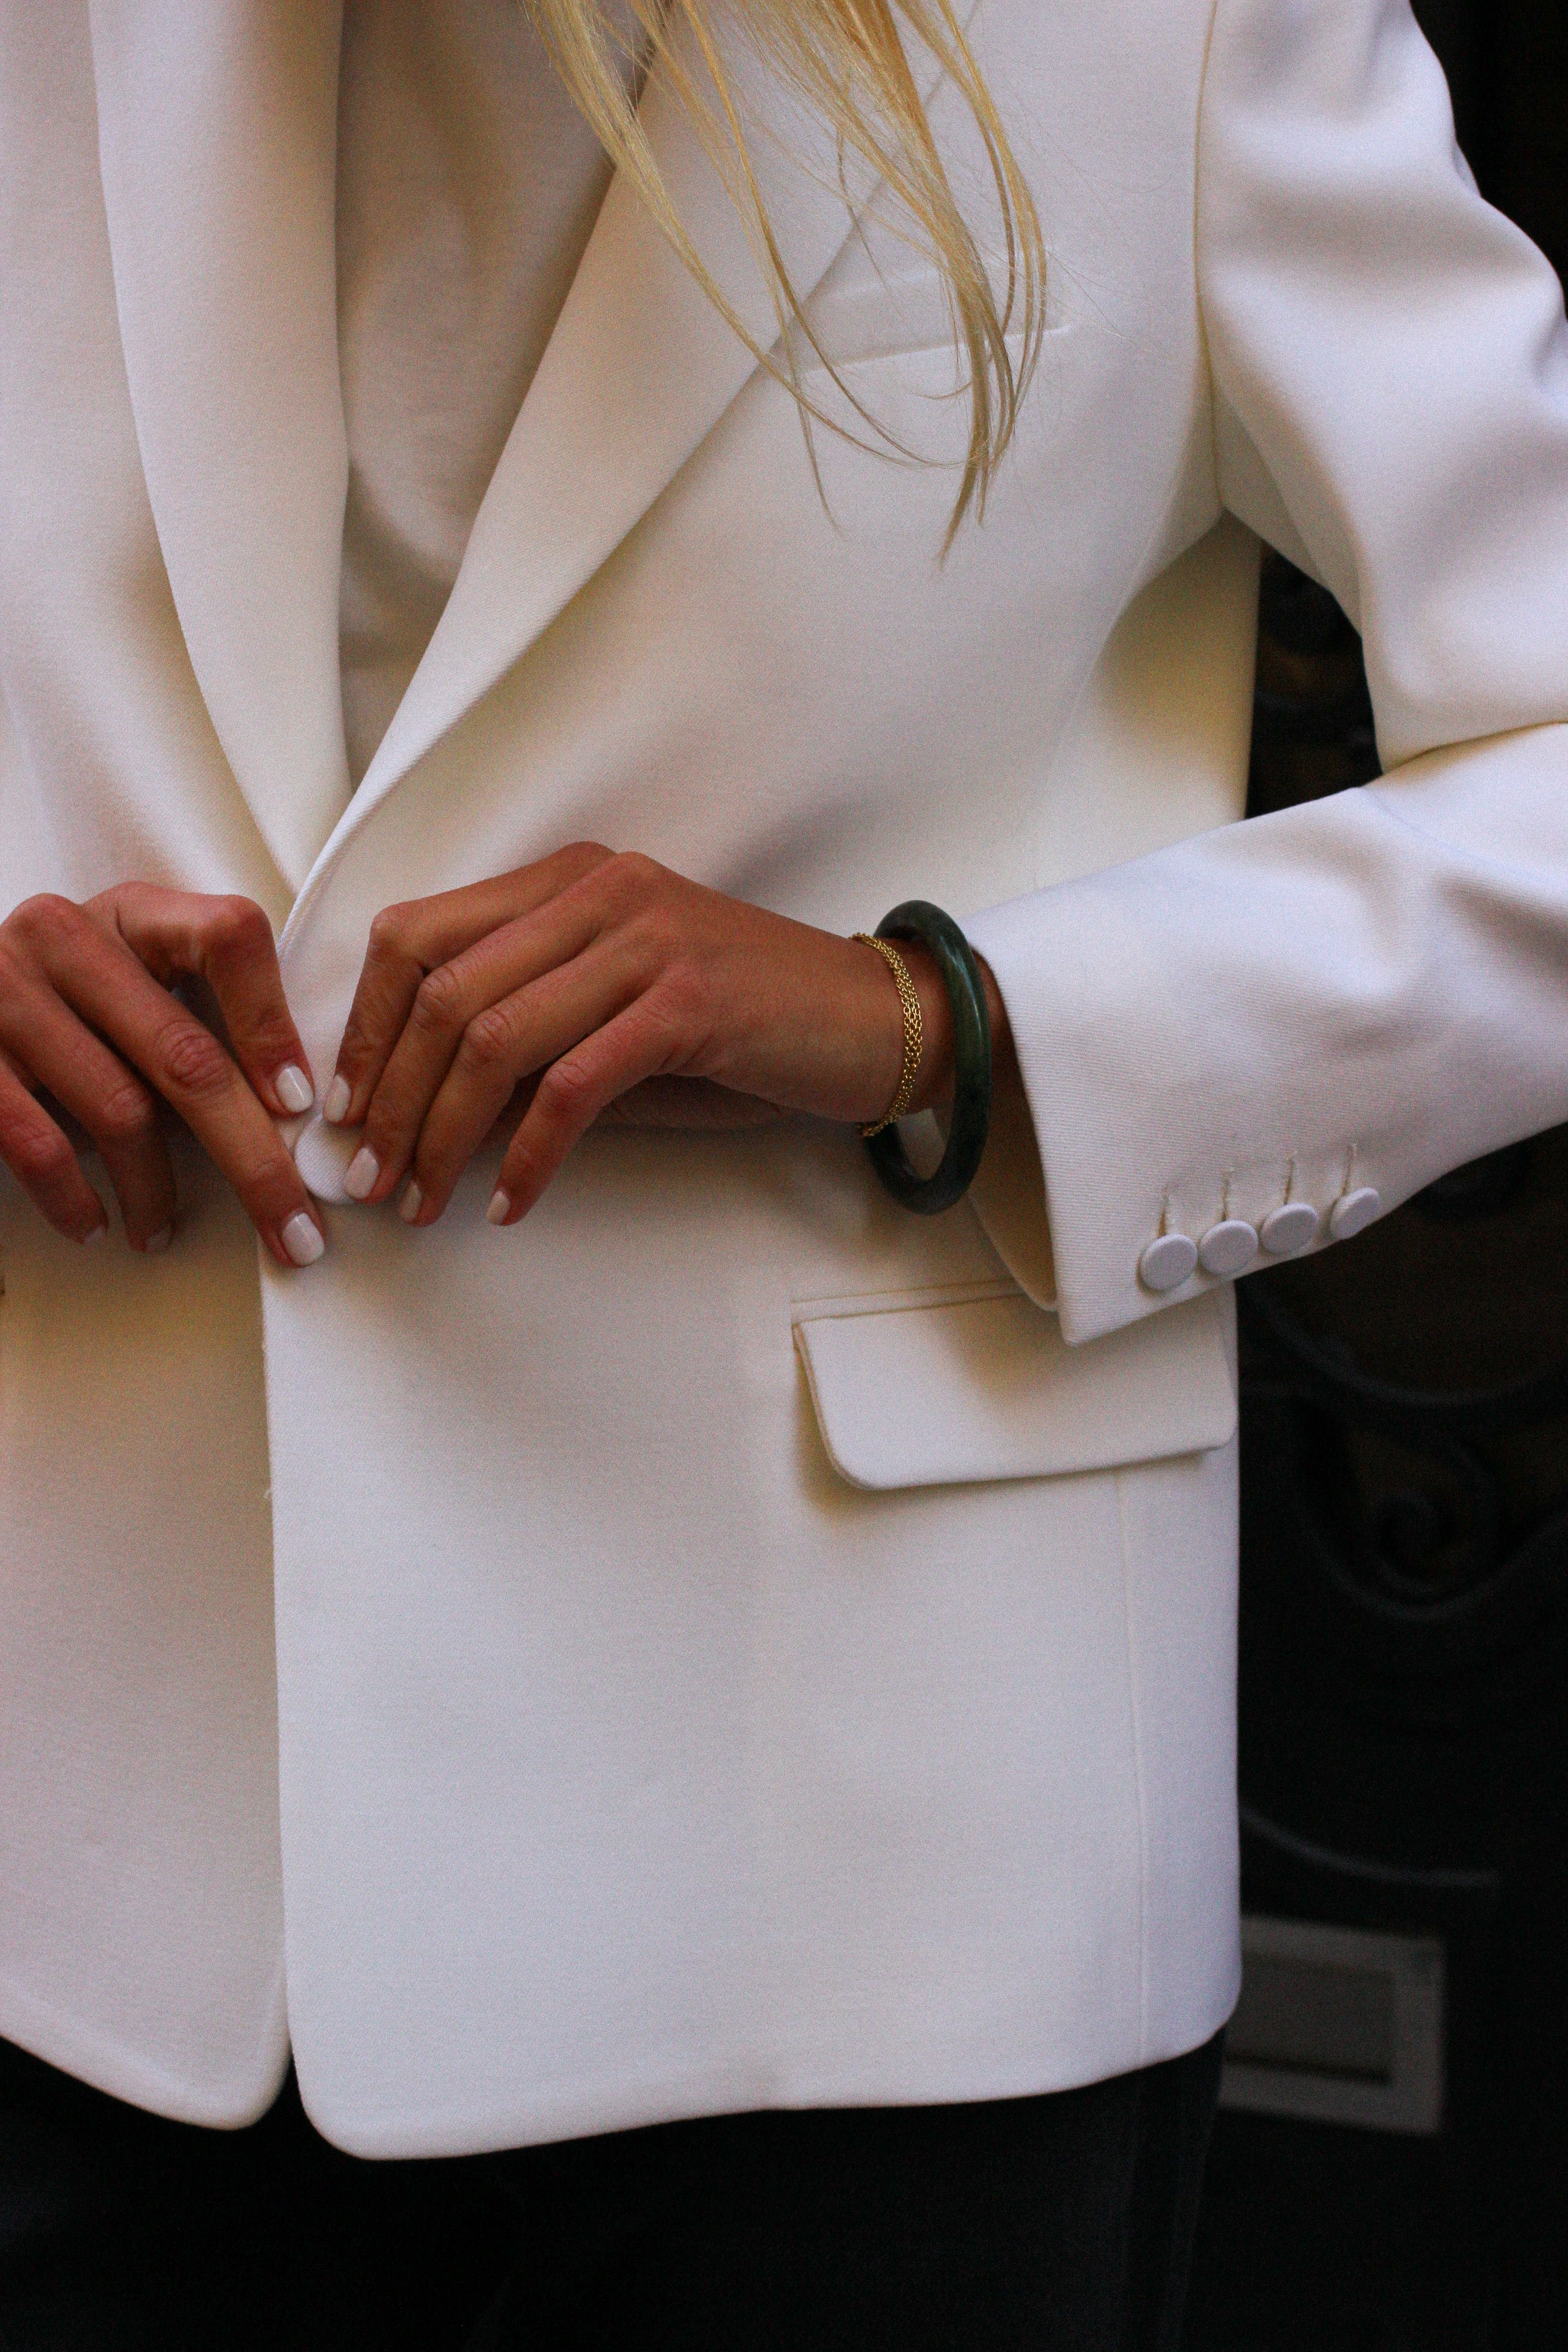 veste blazer Lauren Gabardine blanc cassé made in France par Facettes Studio